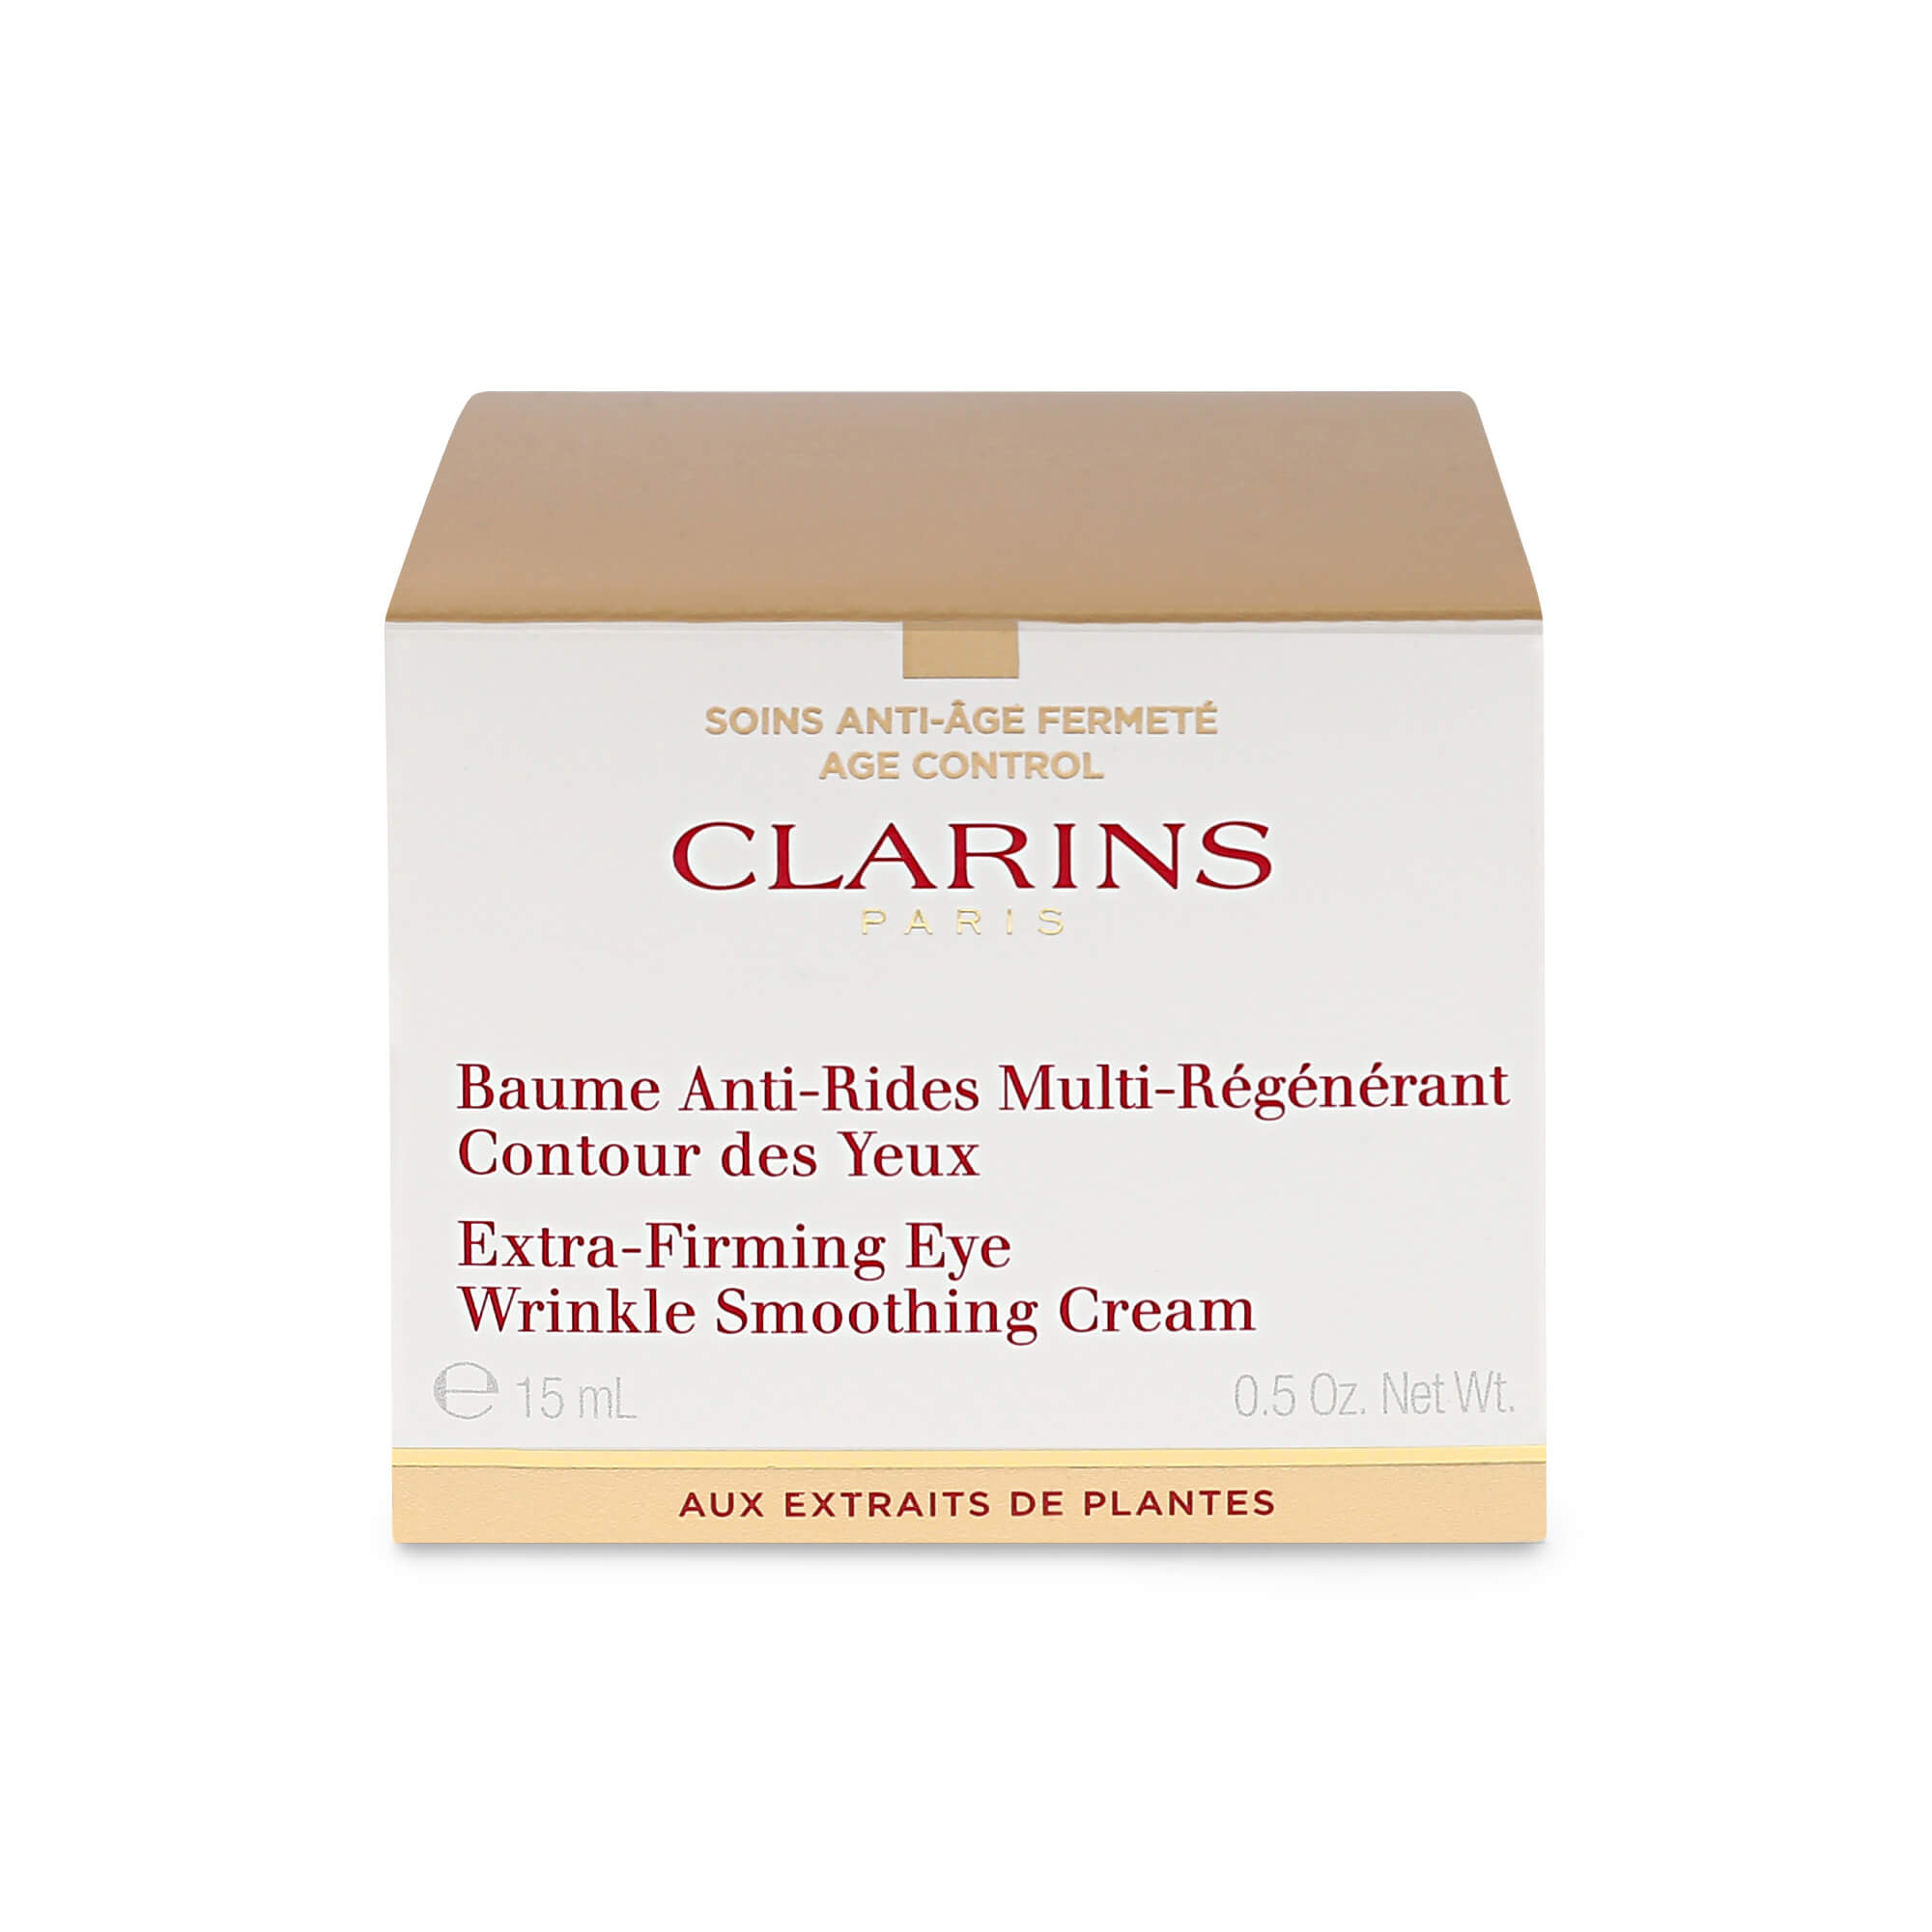 Extra-Firming Eye Wrinkle Smoothing Cream